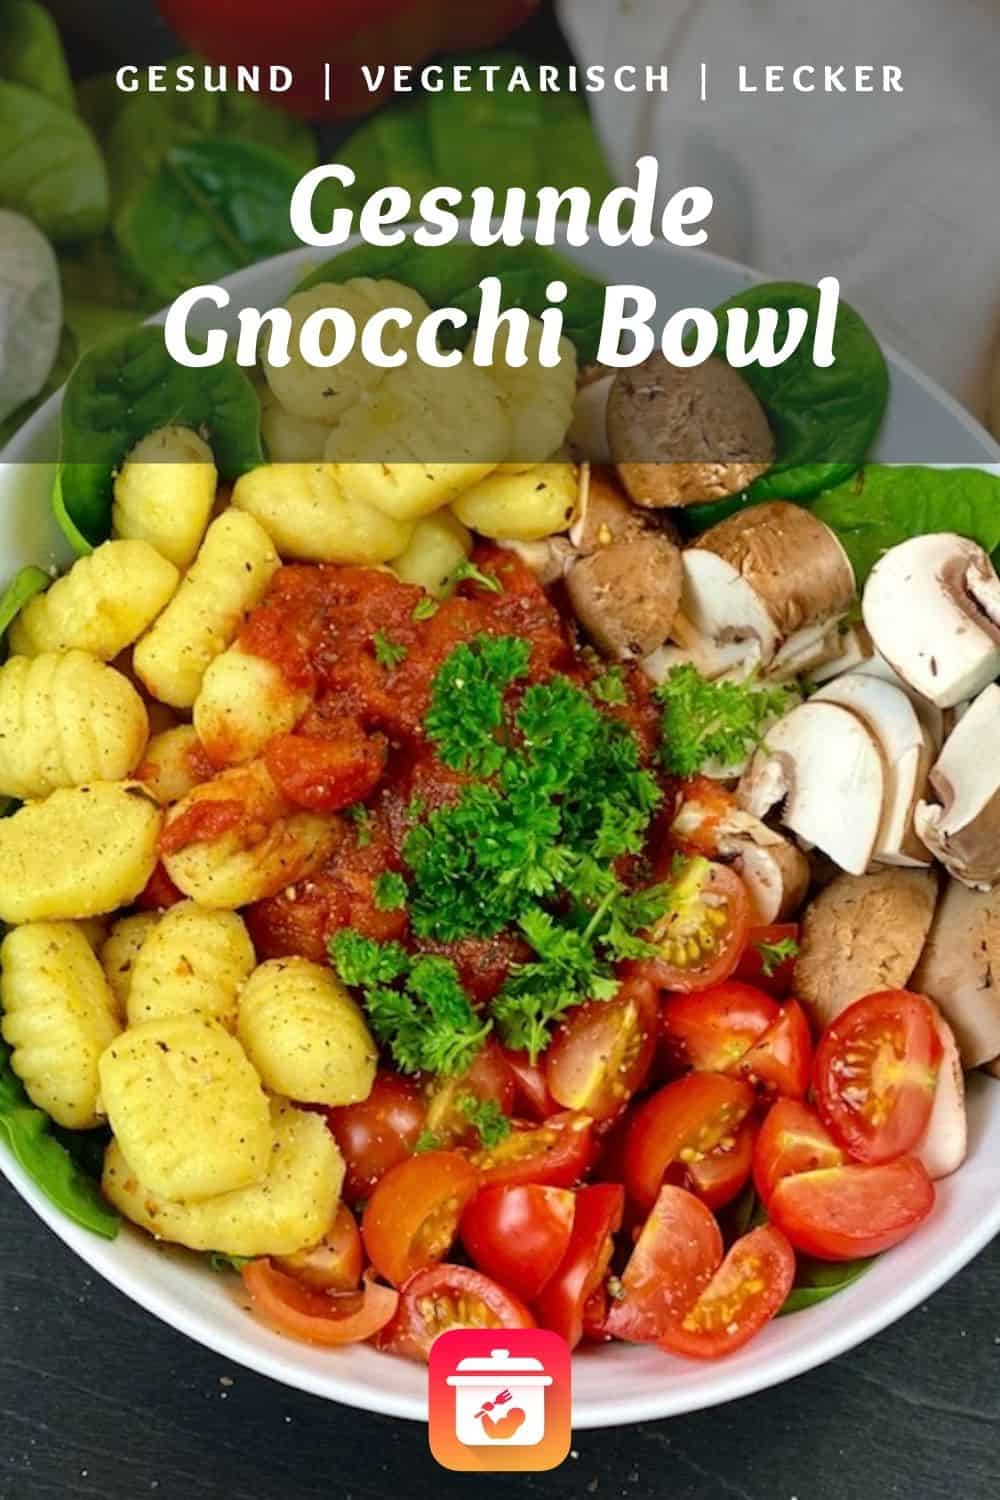 Gnocchi Bowl - Gesundes Gnocchi Rezept